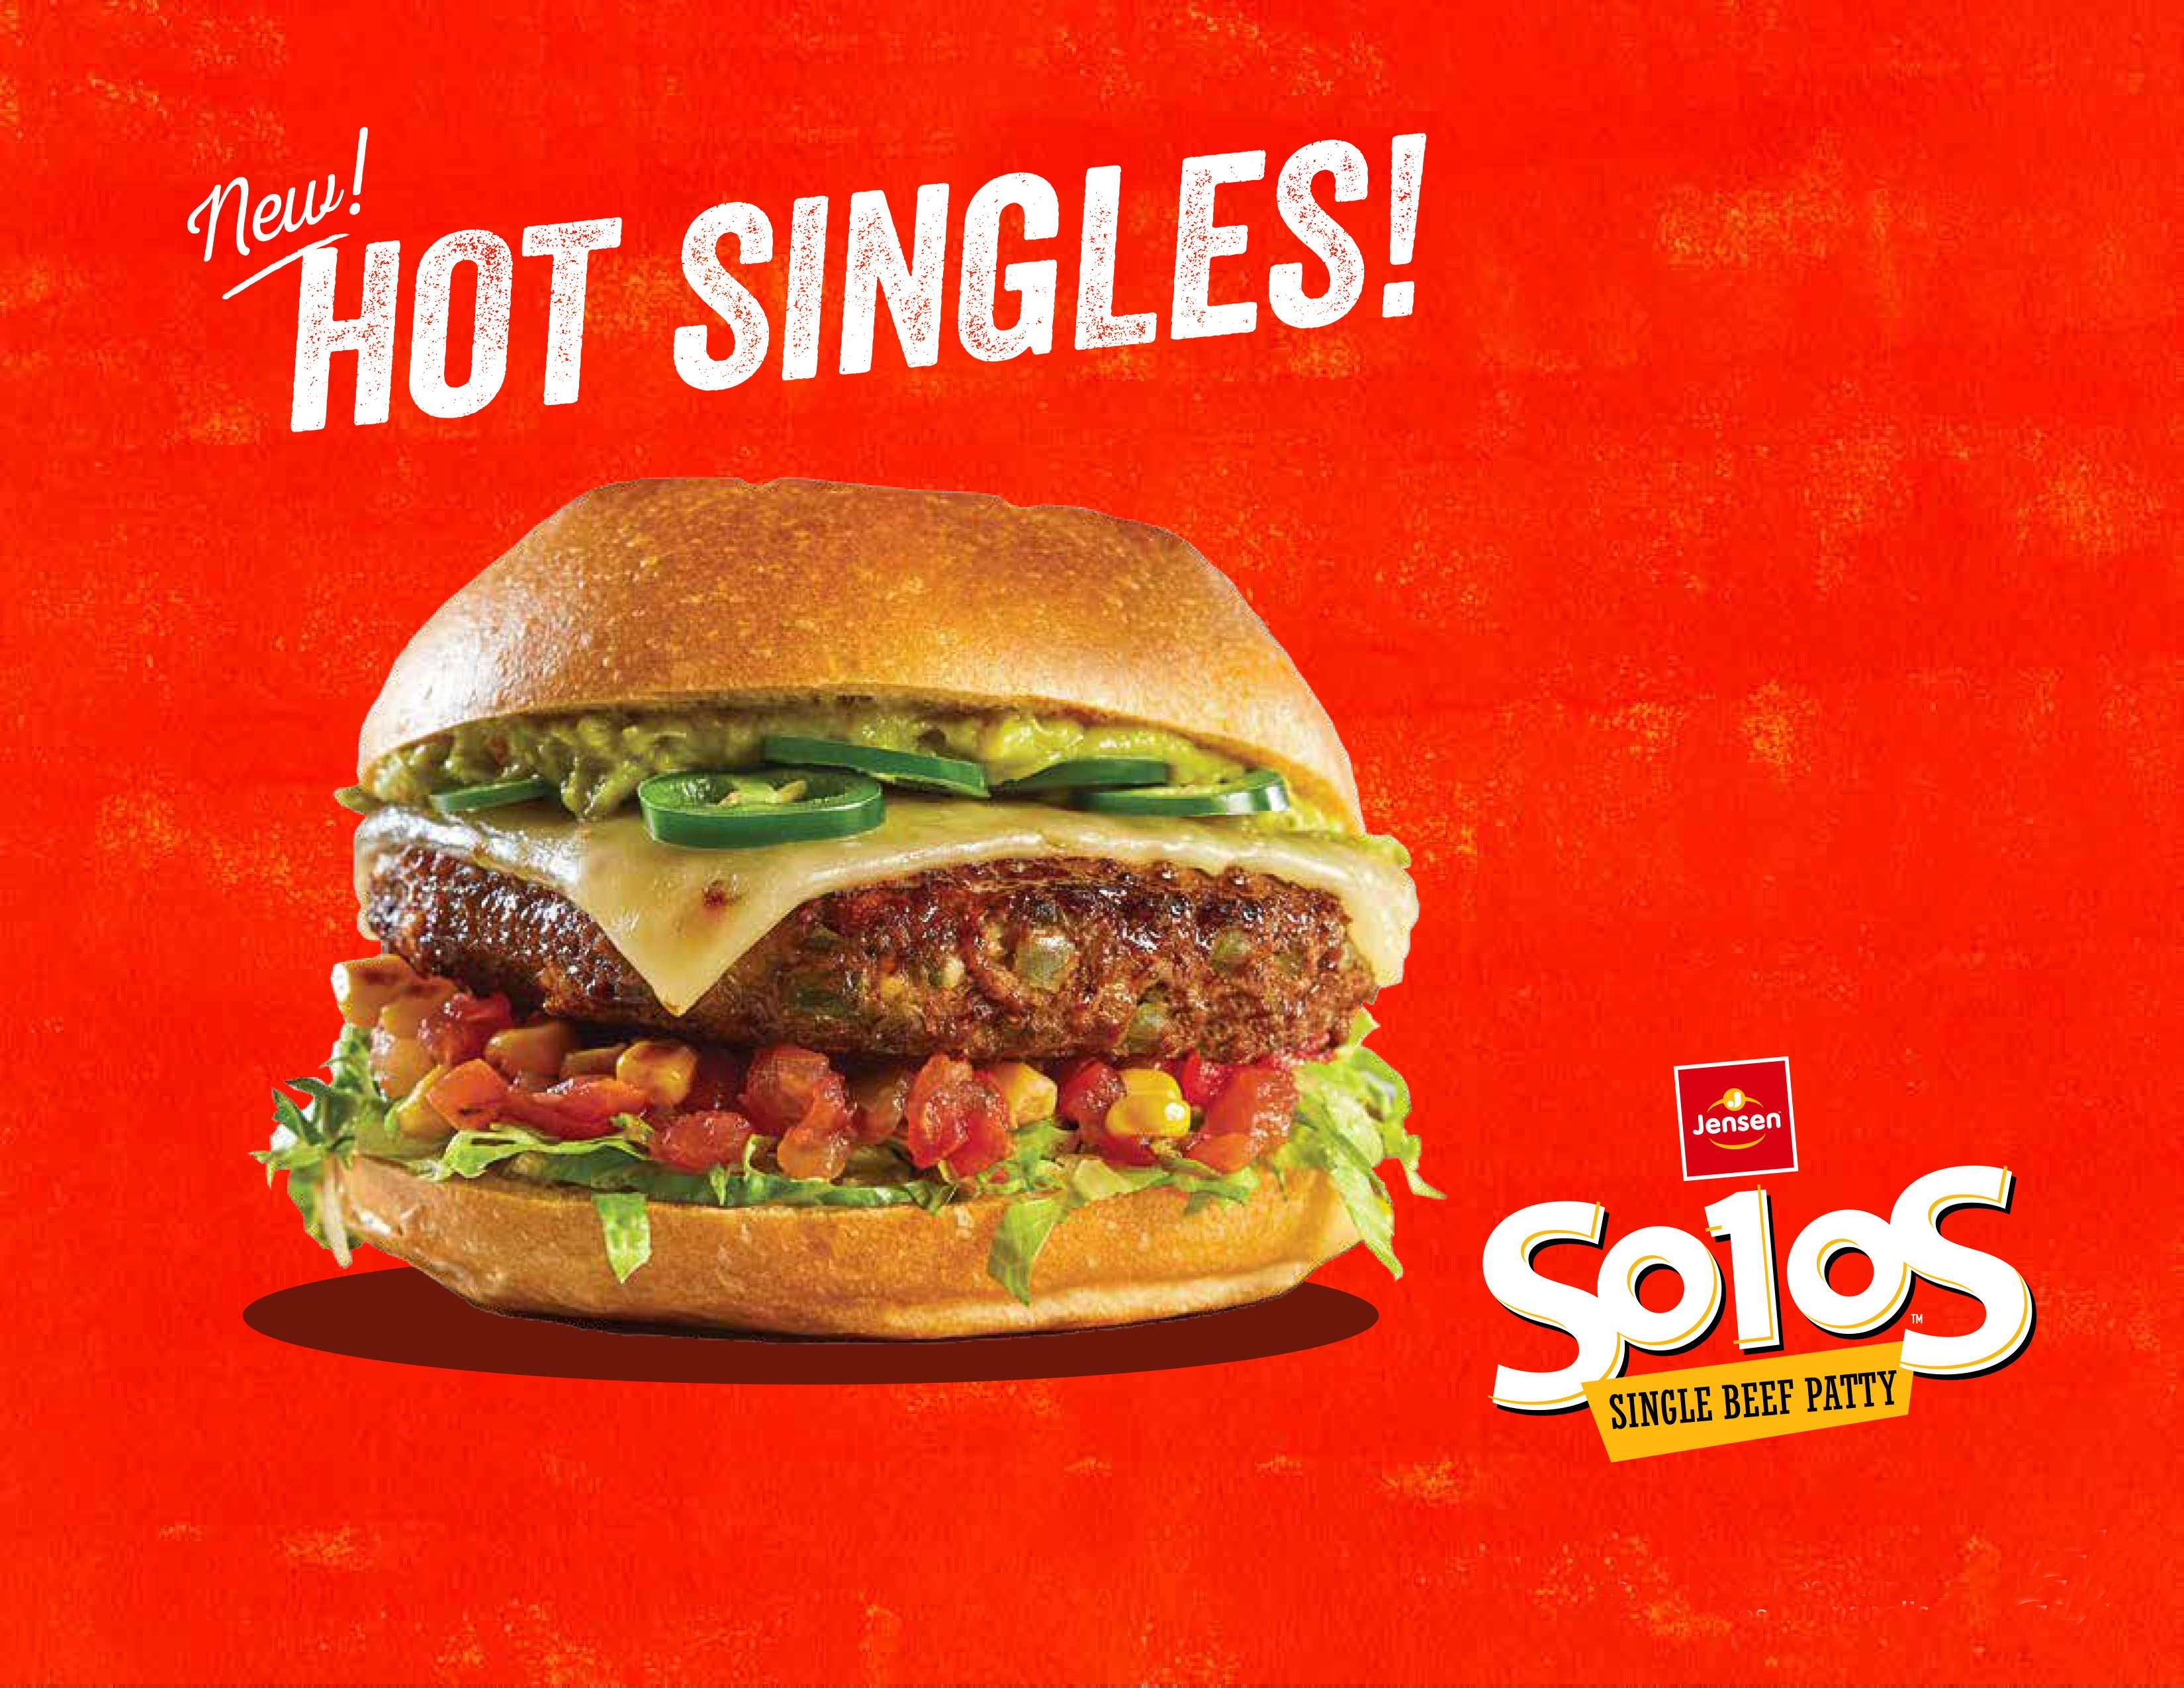 New! Hot Singles! Jensen Solos Individually-Wrapped Hamburger Patty